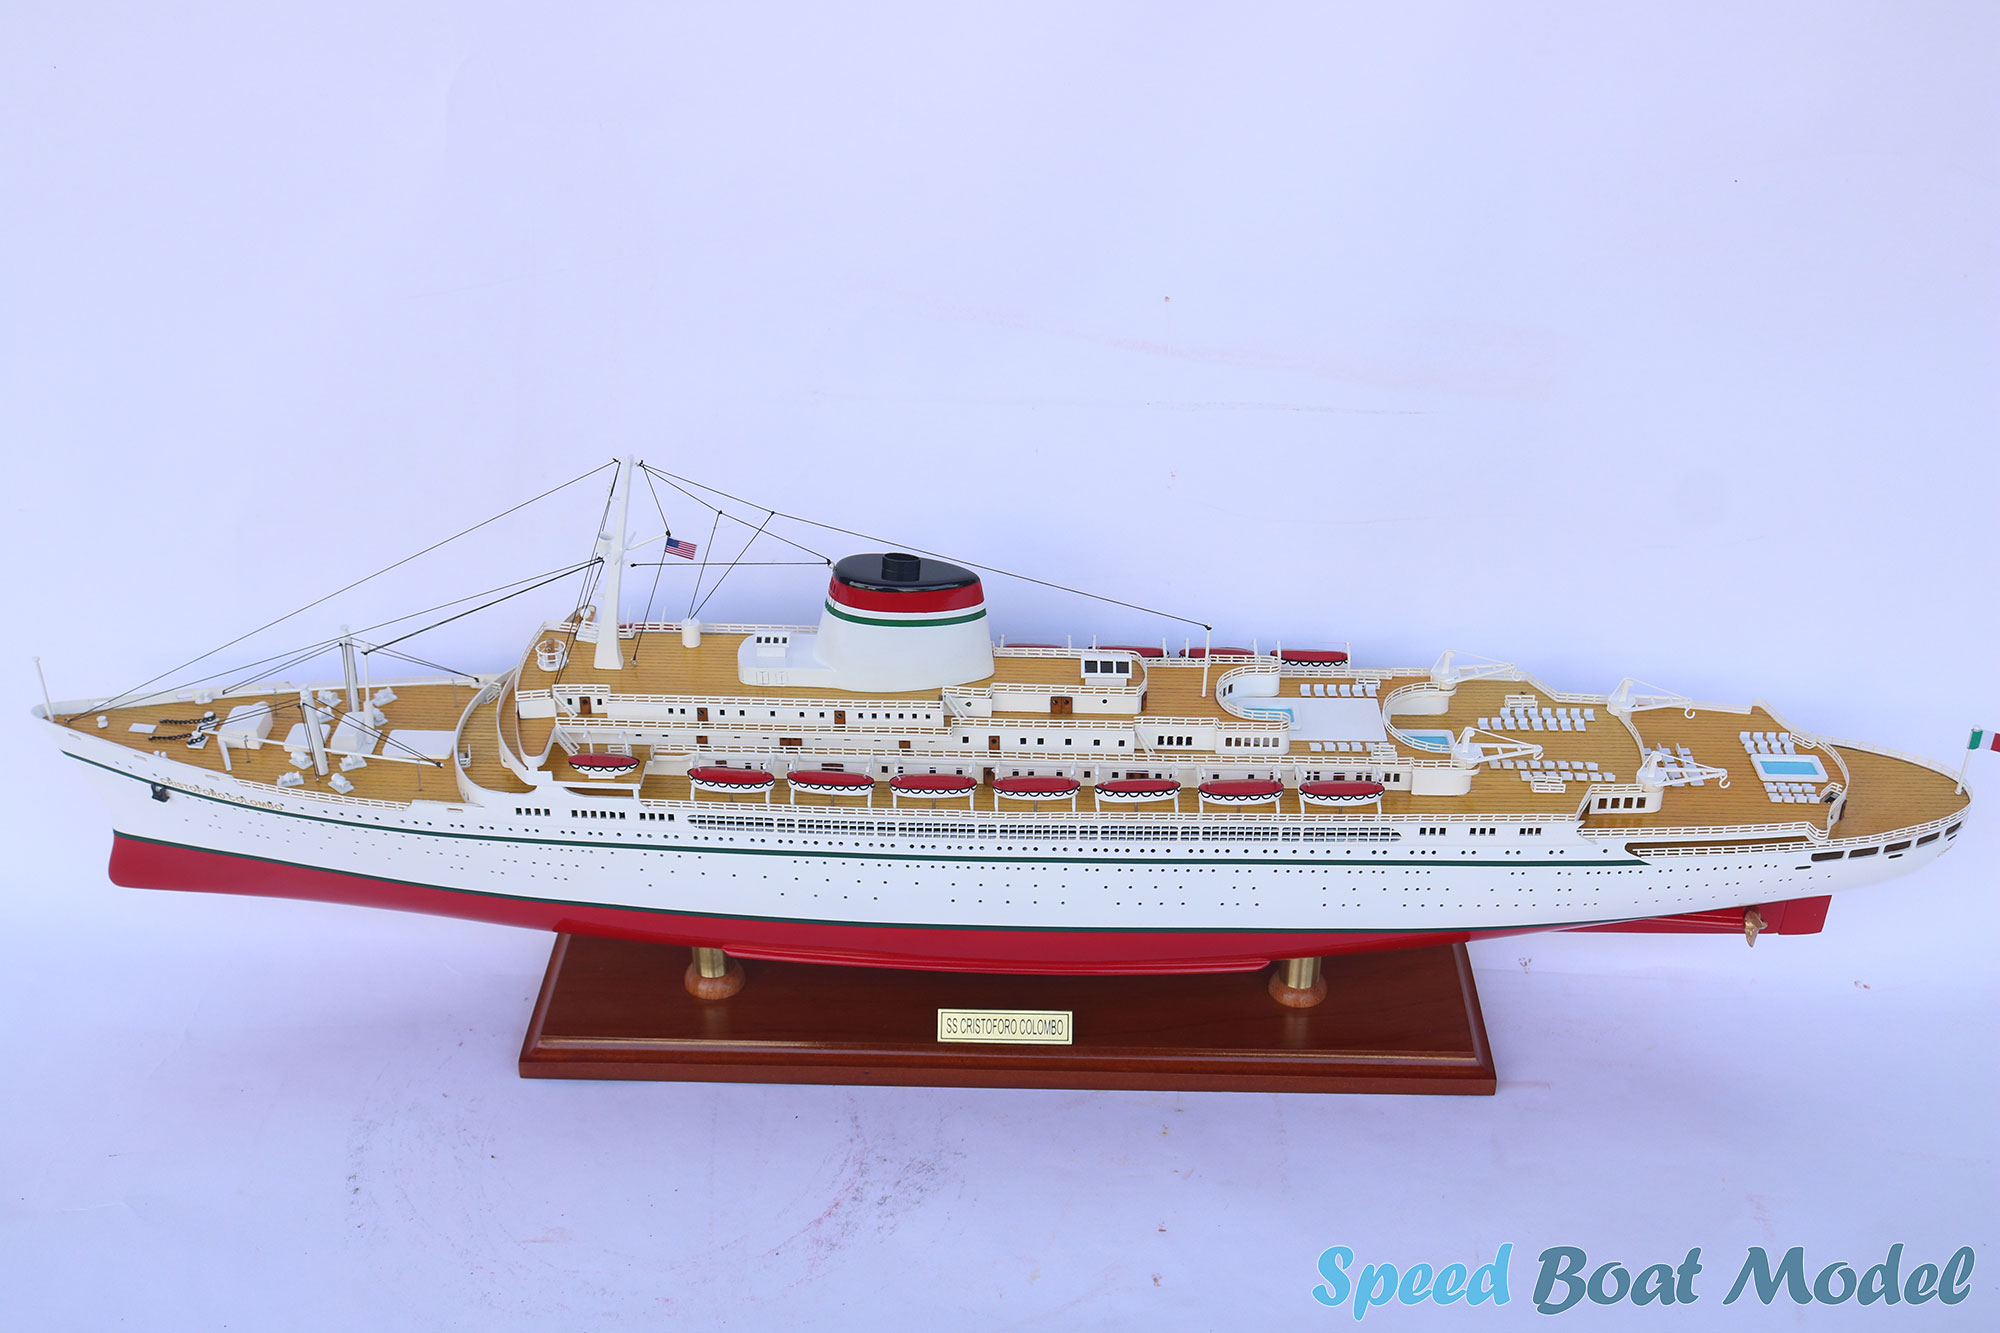 White & Red SS Cristorofo Colombo Cruise Ship Model 34.3"